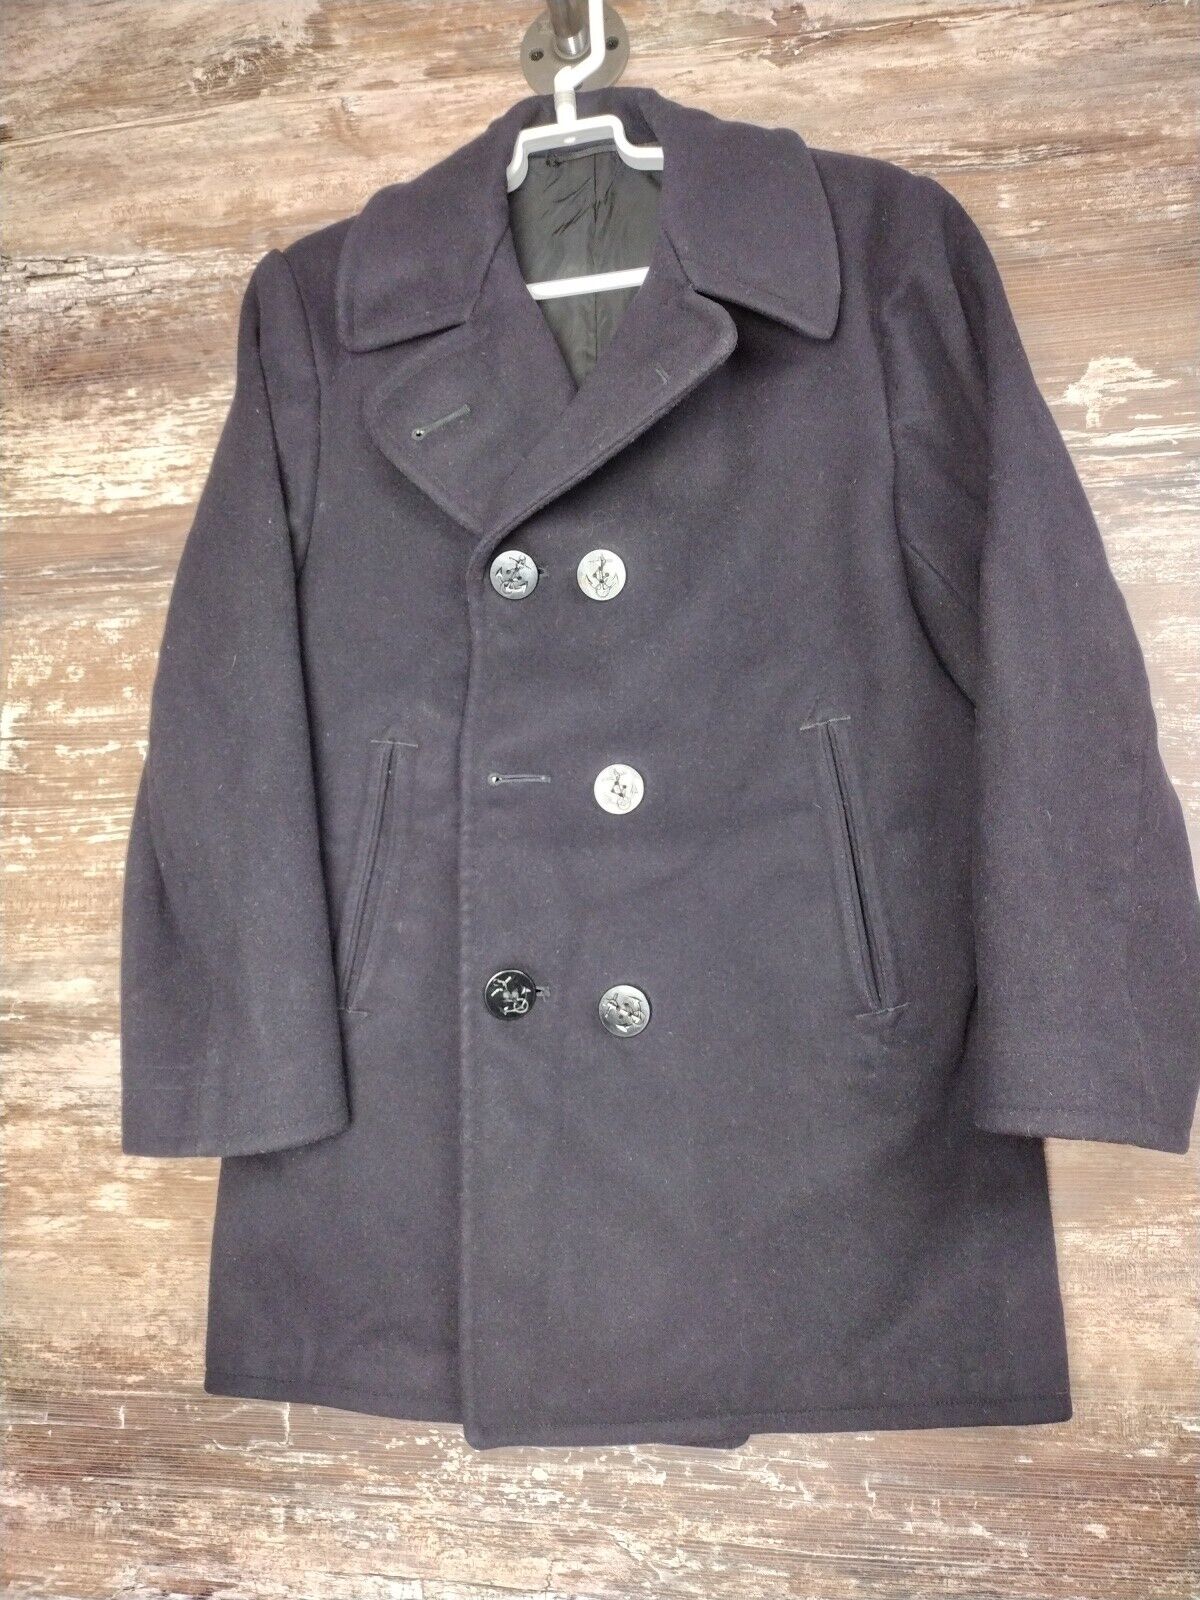 Very Old U S Navy Issued Dark Navy “pea” coat size 34 R - Heavy 100% wool coat